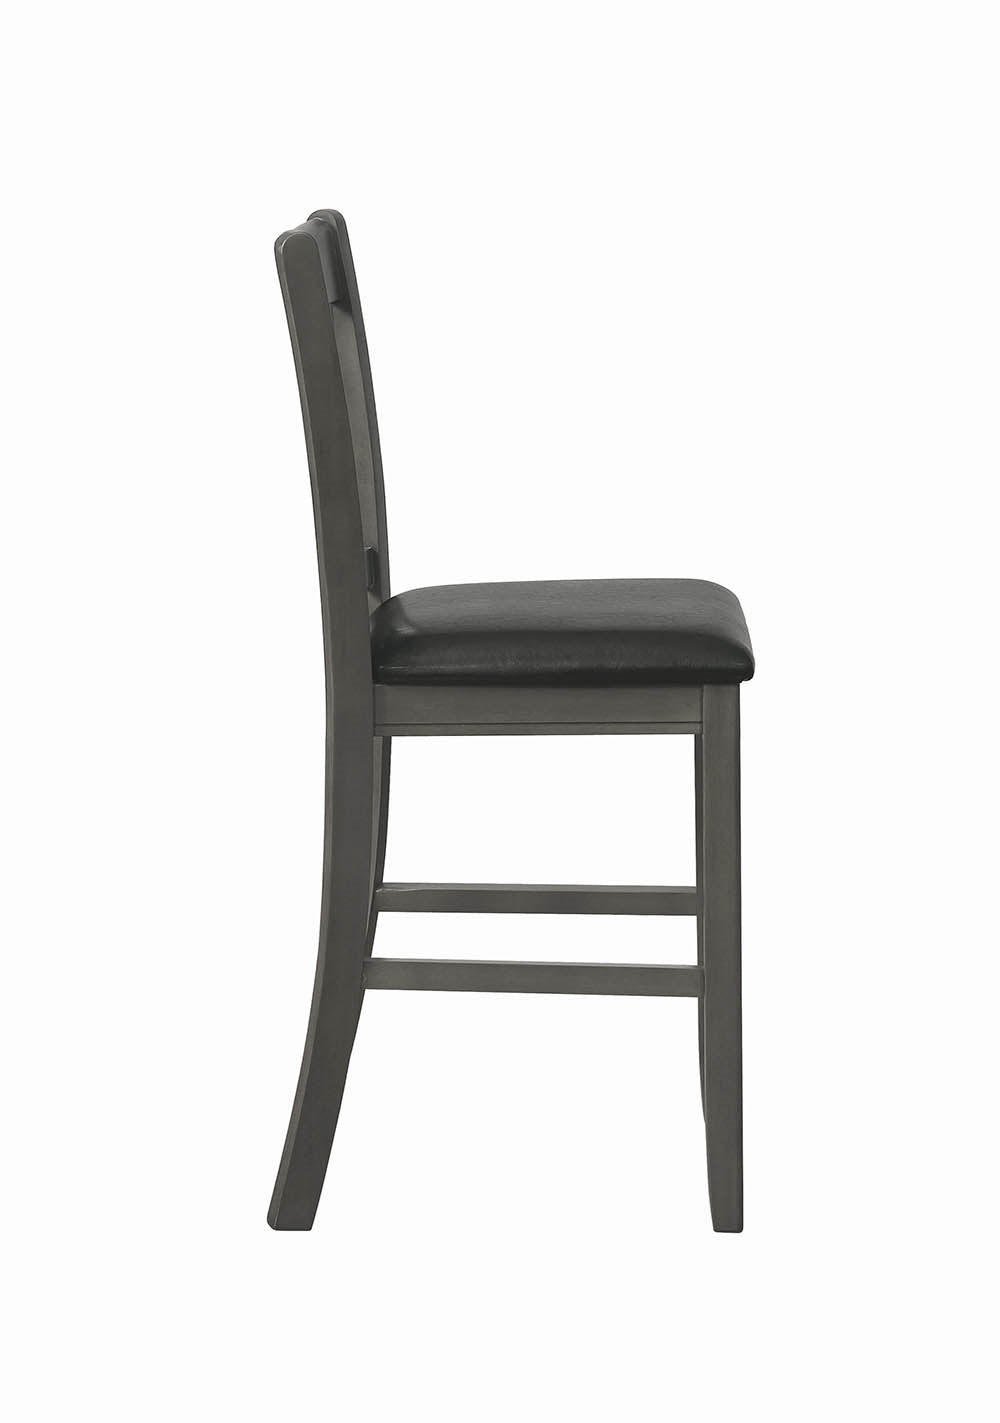 Lavon Medium Grey Counter Height Chair Set of 2